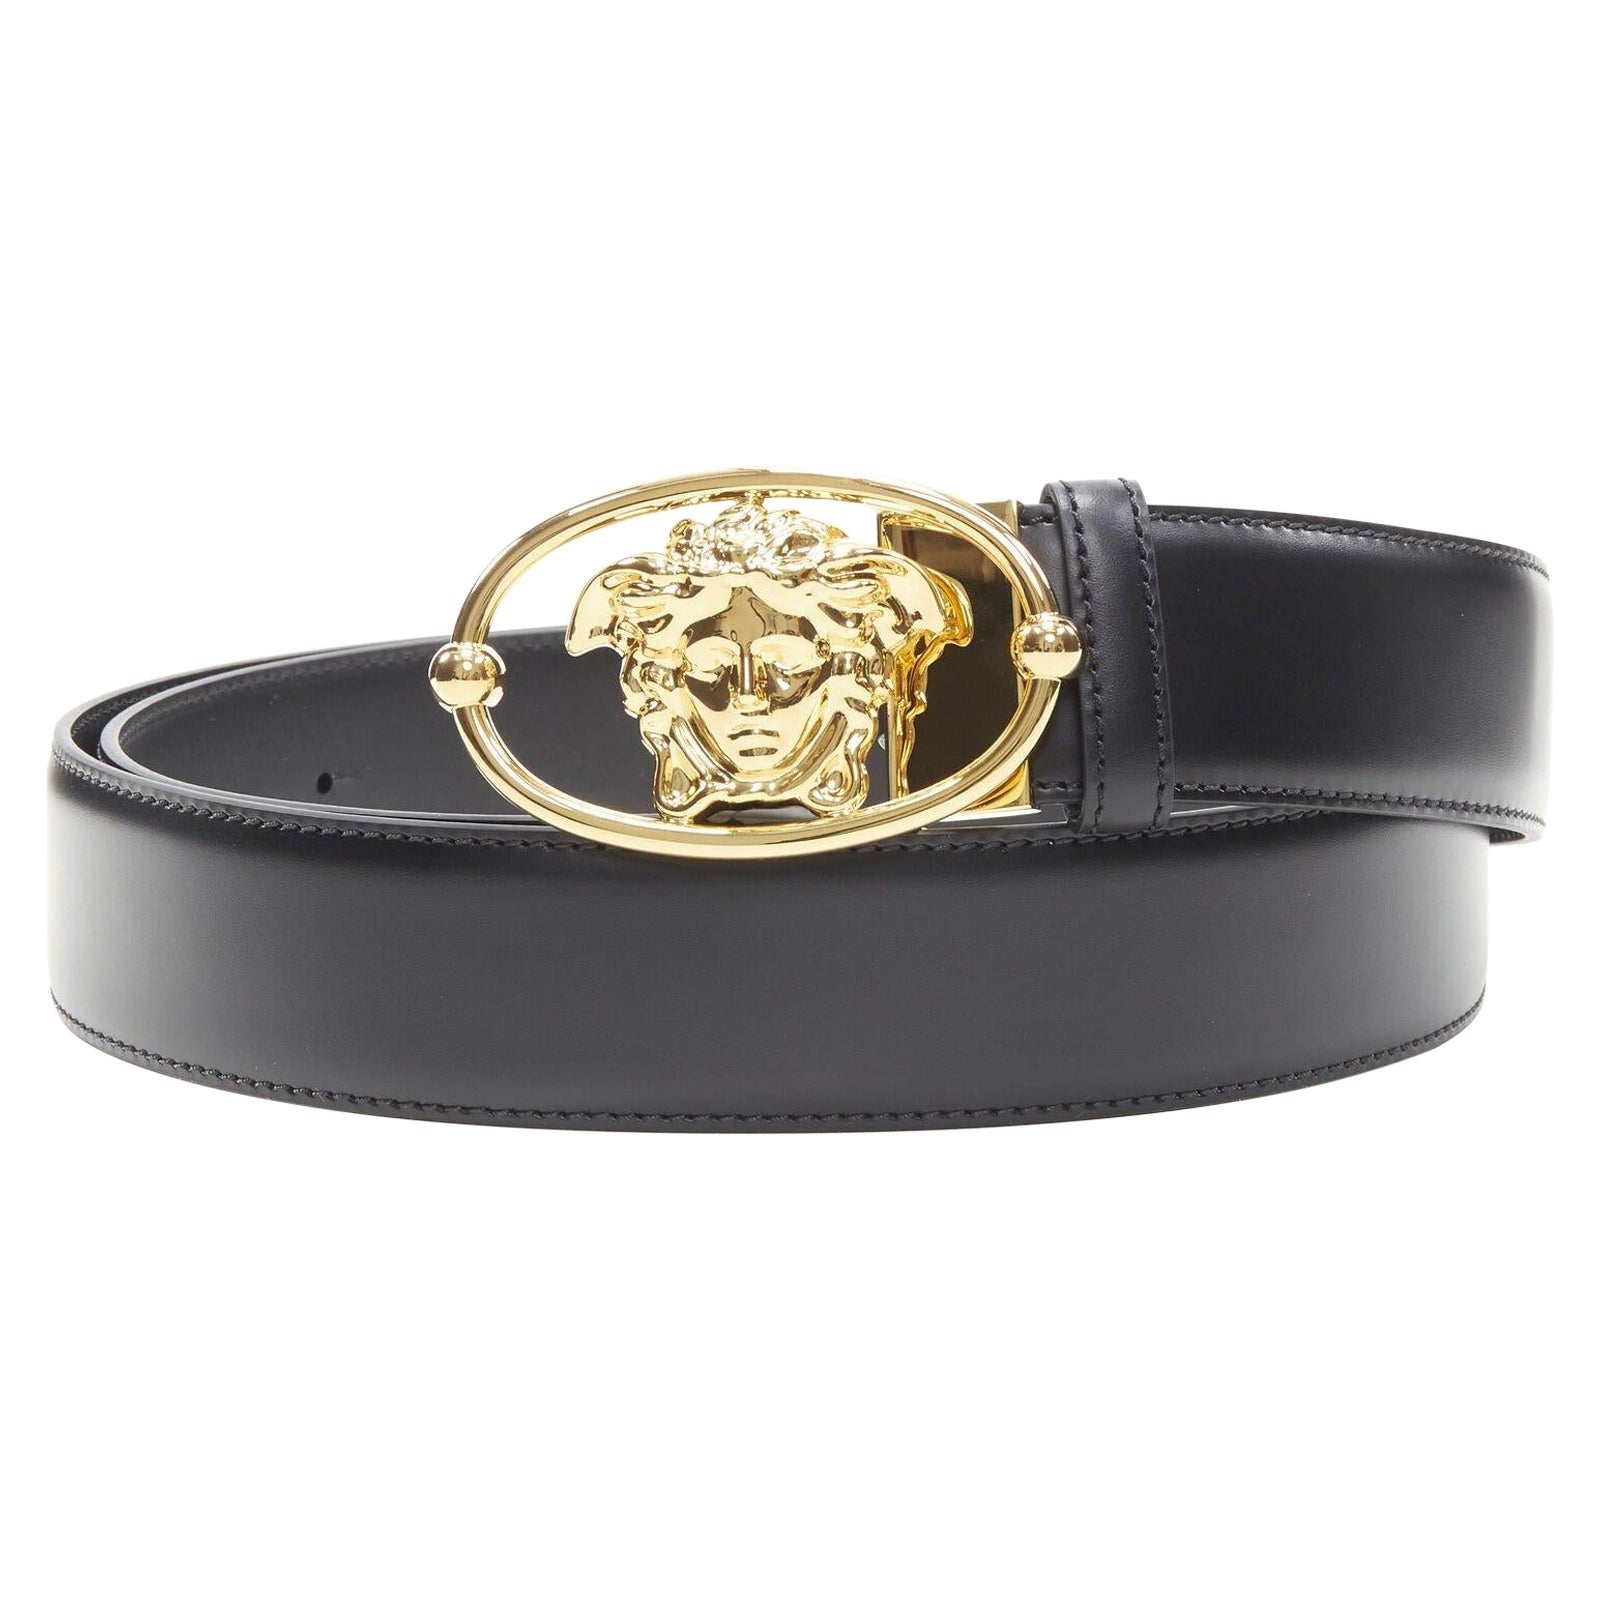 VERSACE La Medusa Insignia gold oval buckle black leather belt 100cm 38-42" For Sale